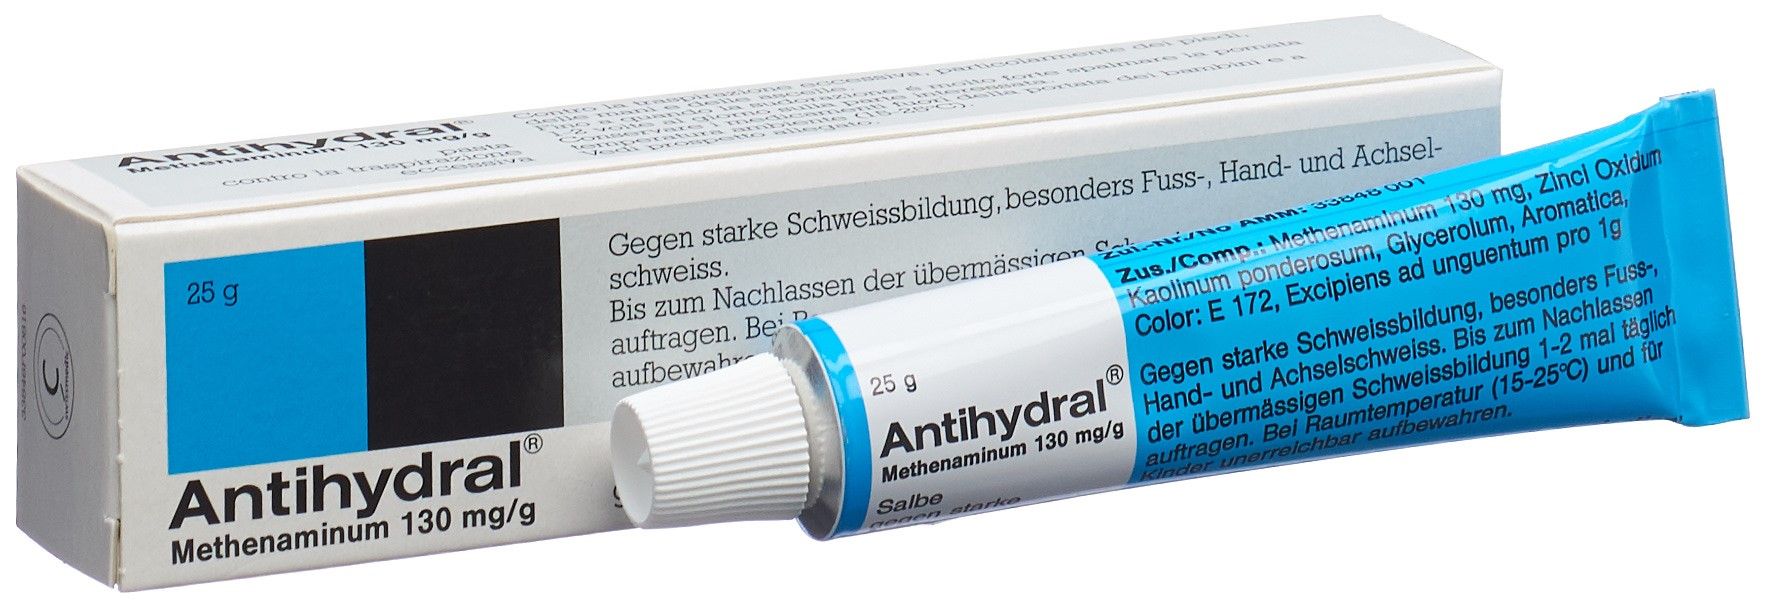 Creme antihydral Antihydral Salbe